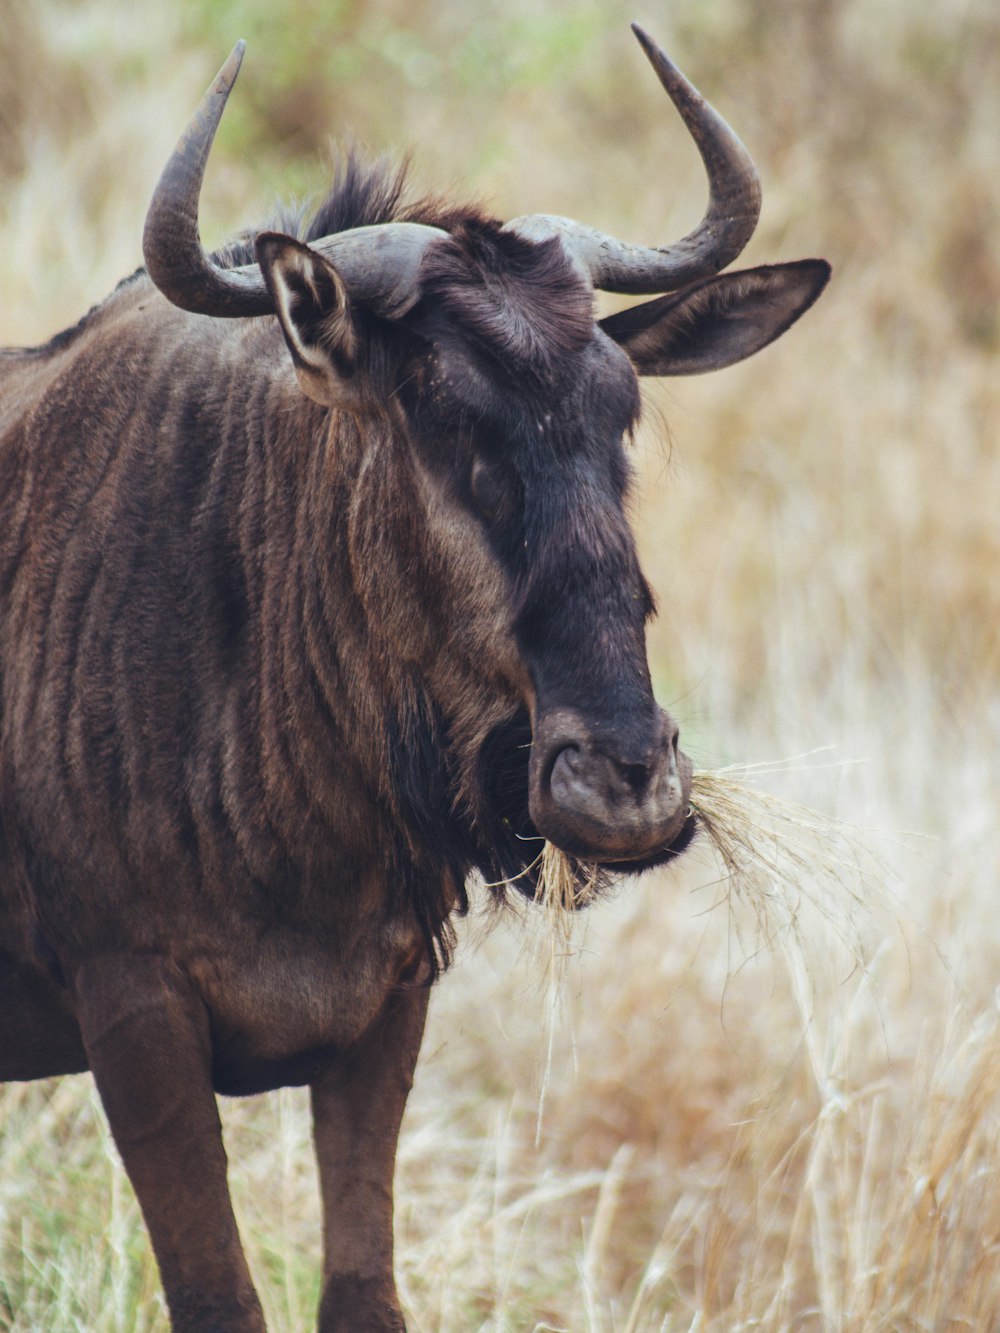 a close-up of a buffalo